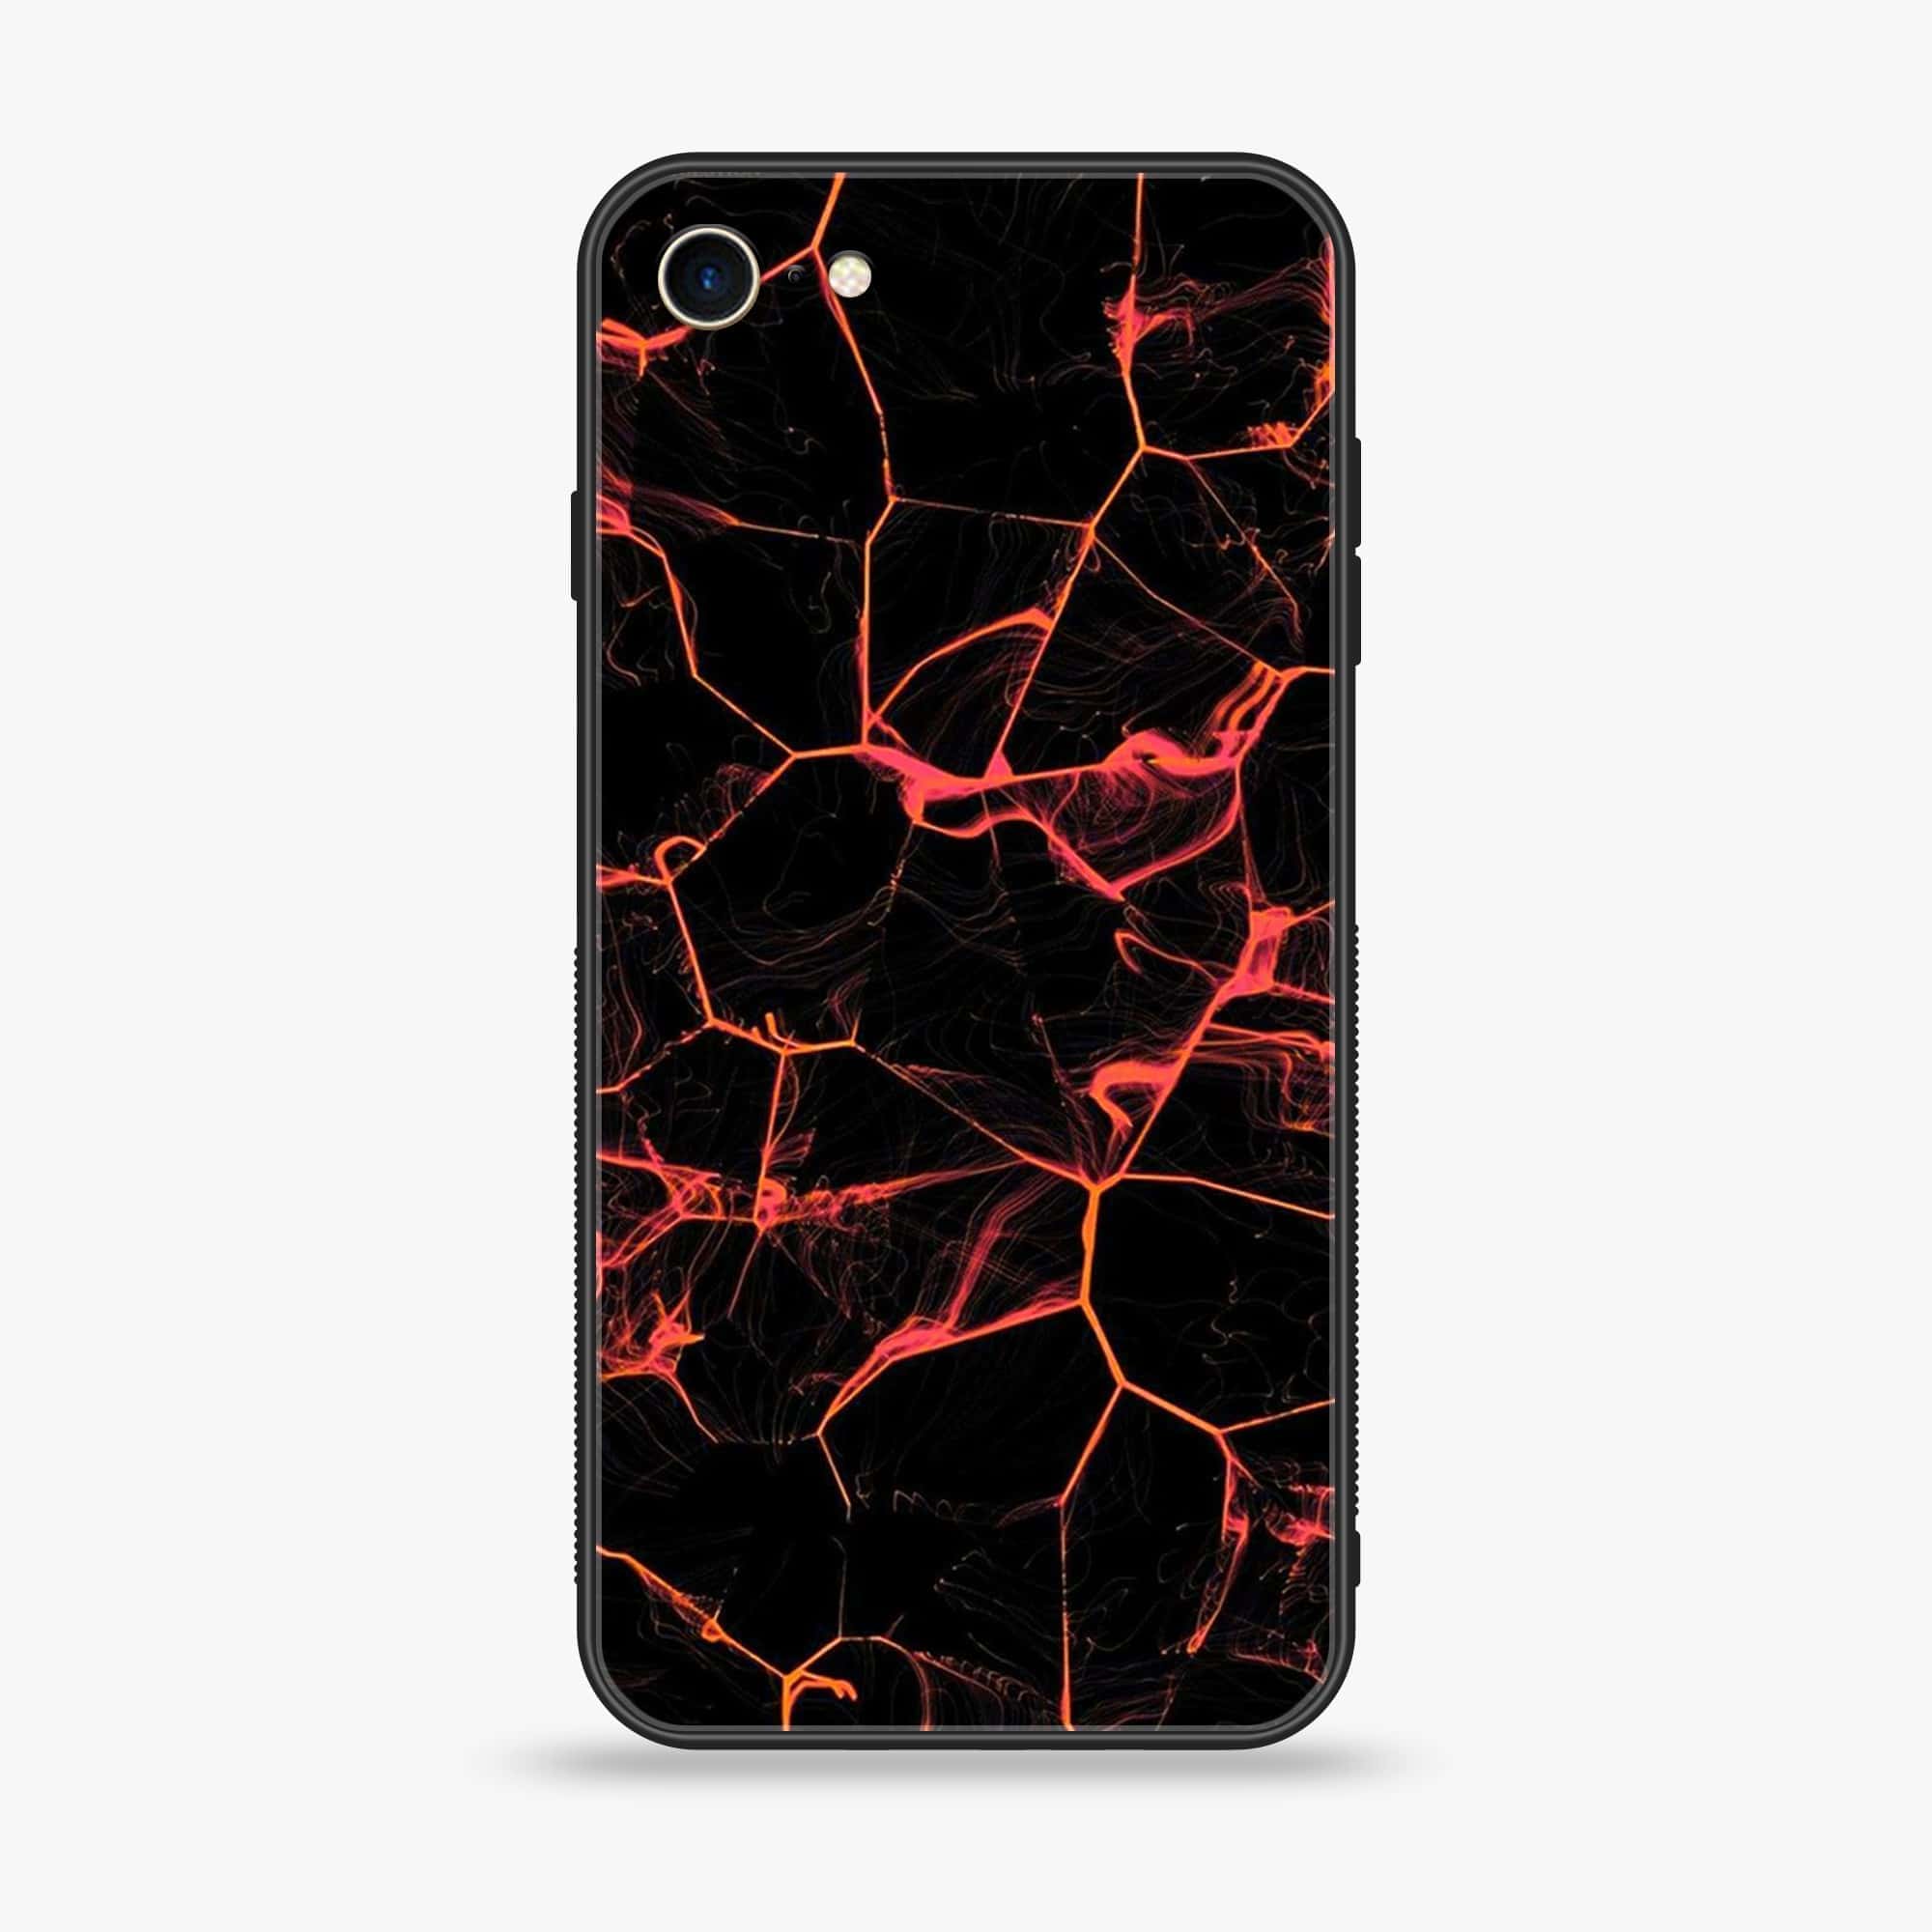 iPhone 7 - Black Marble Series - Premium Printed Glass soft Bumper shock Proof Case